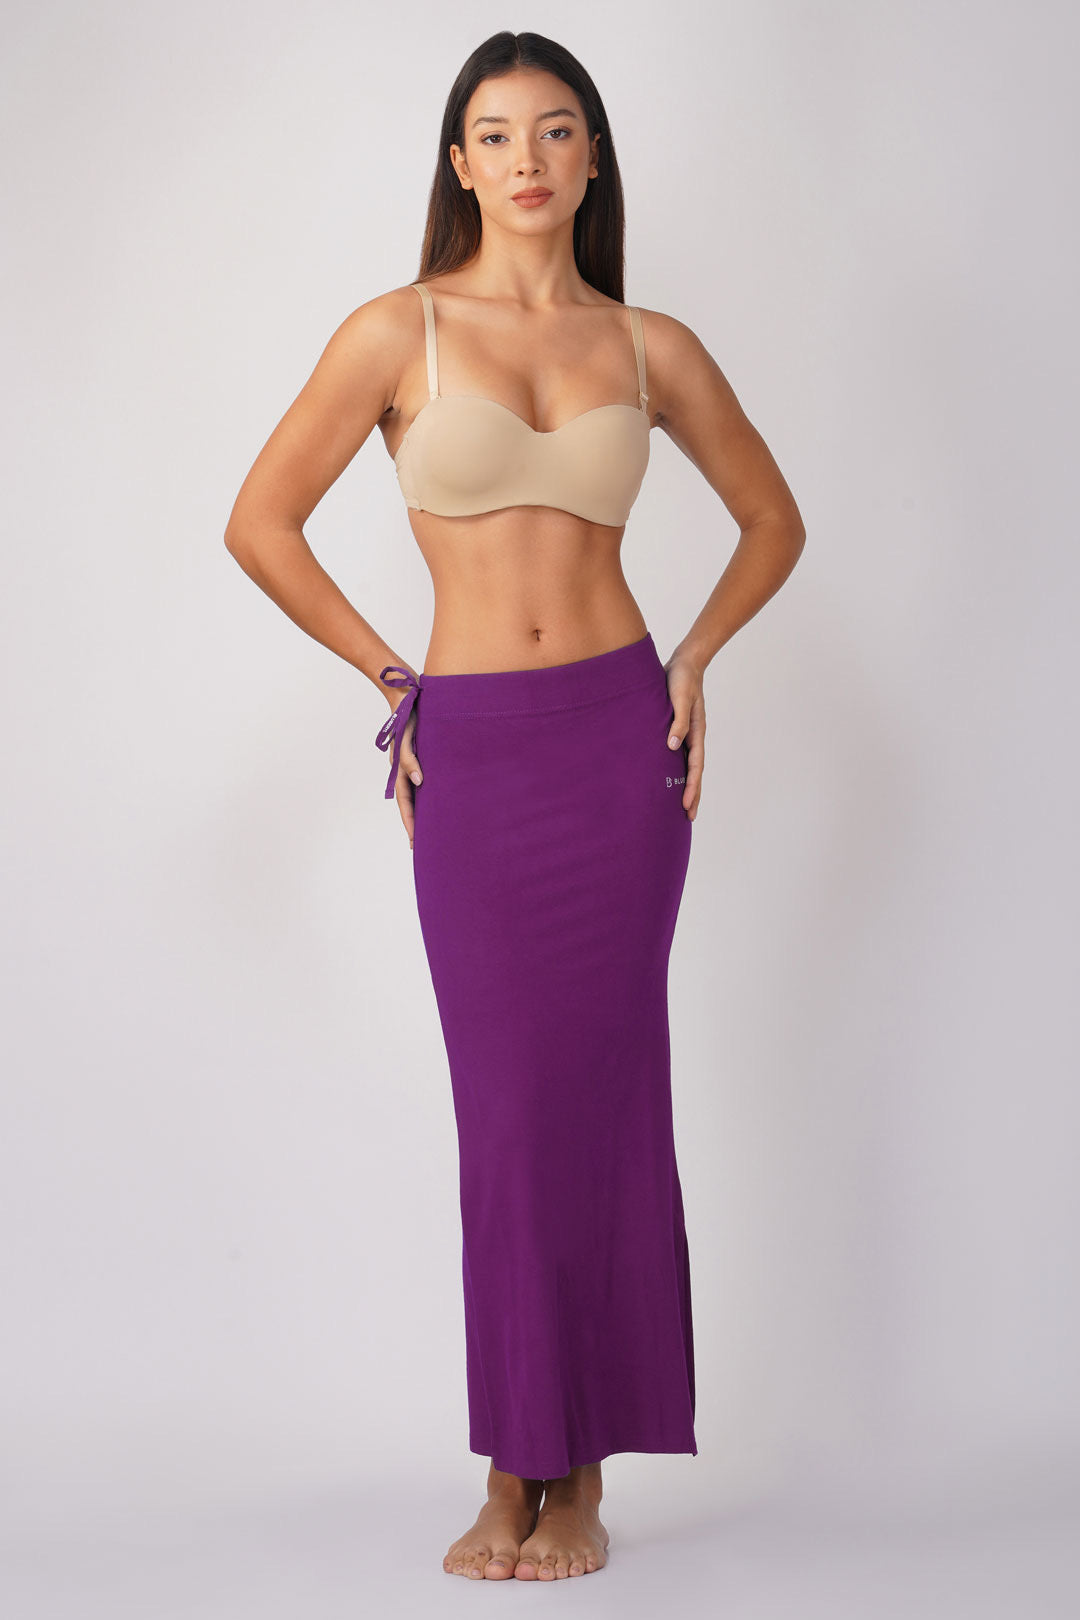 Shop purple Saree Shapewear: Buy 2 Get Rs.200 Off